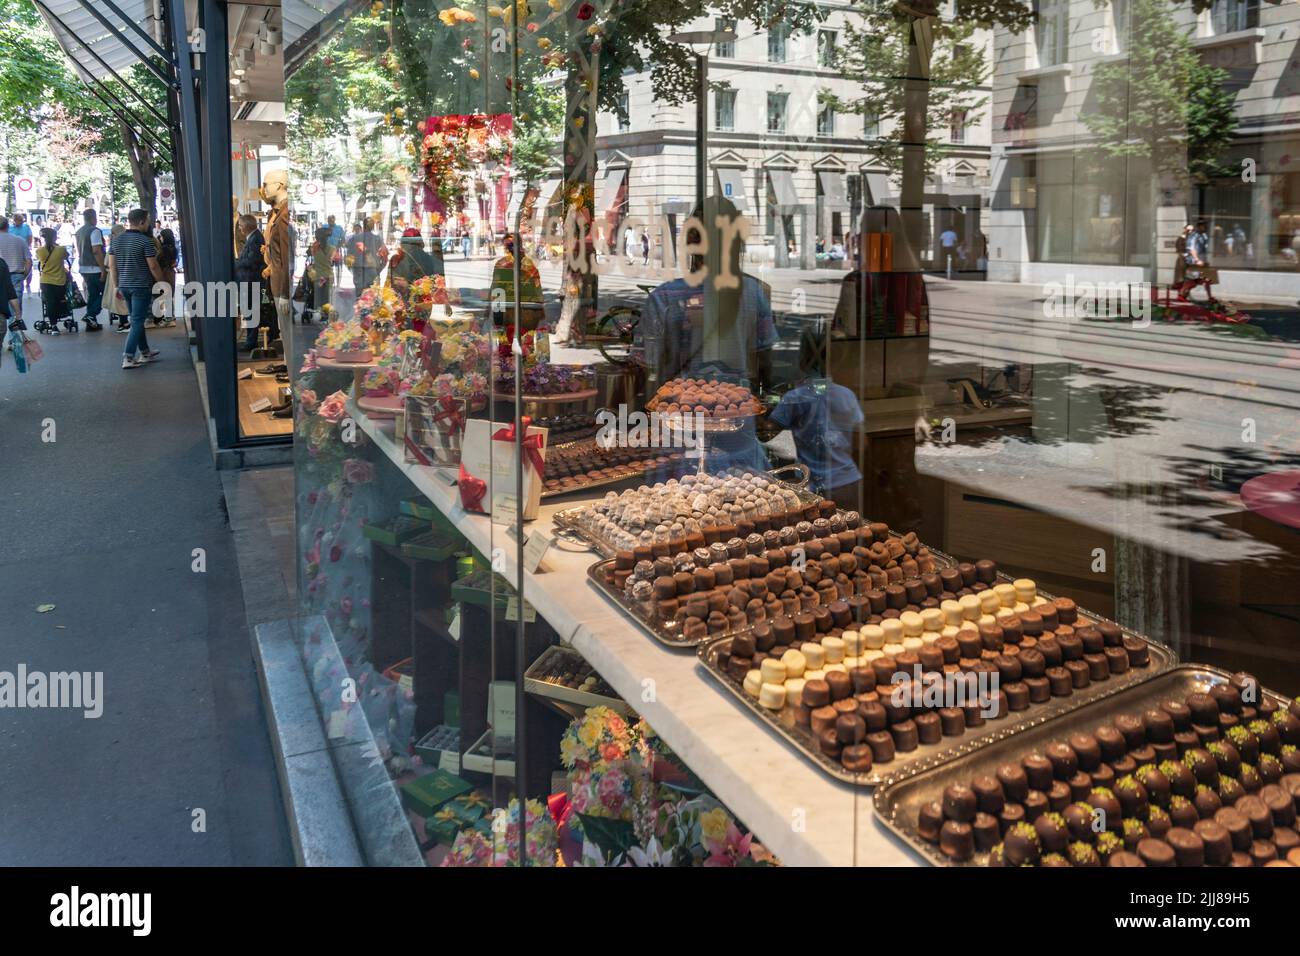 Confiserie Teuscher, Schaufenster, Spiegelung, Zürich, Schweiz Foto de stock